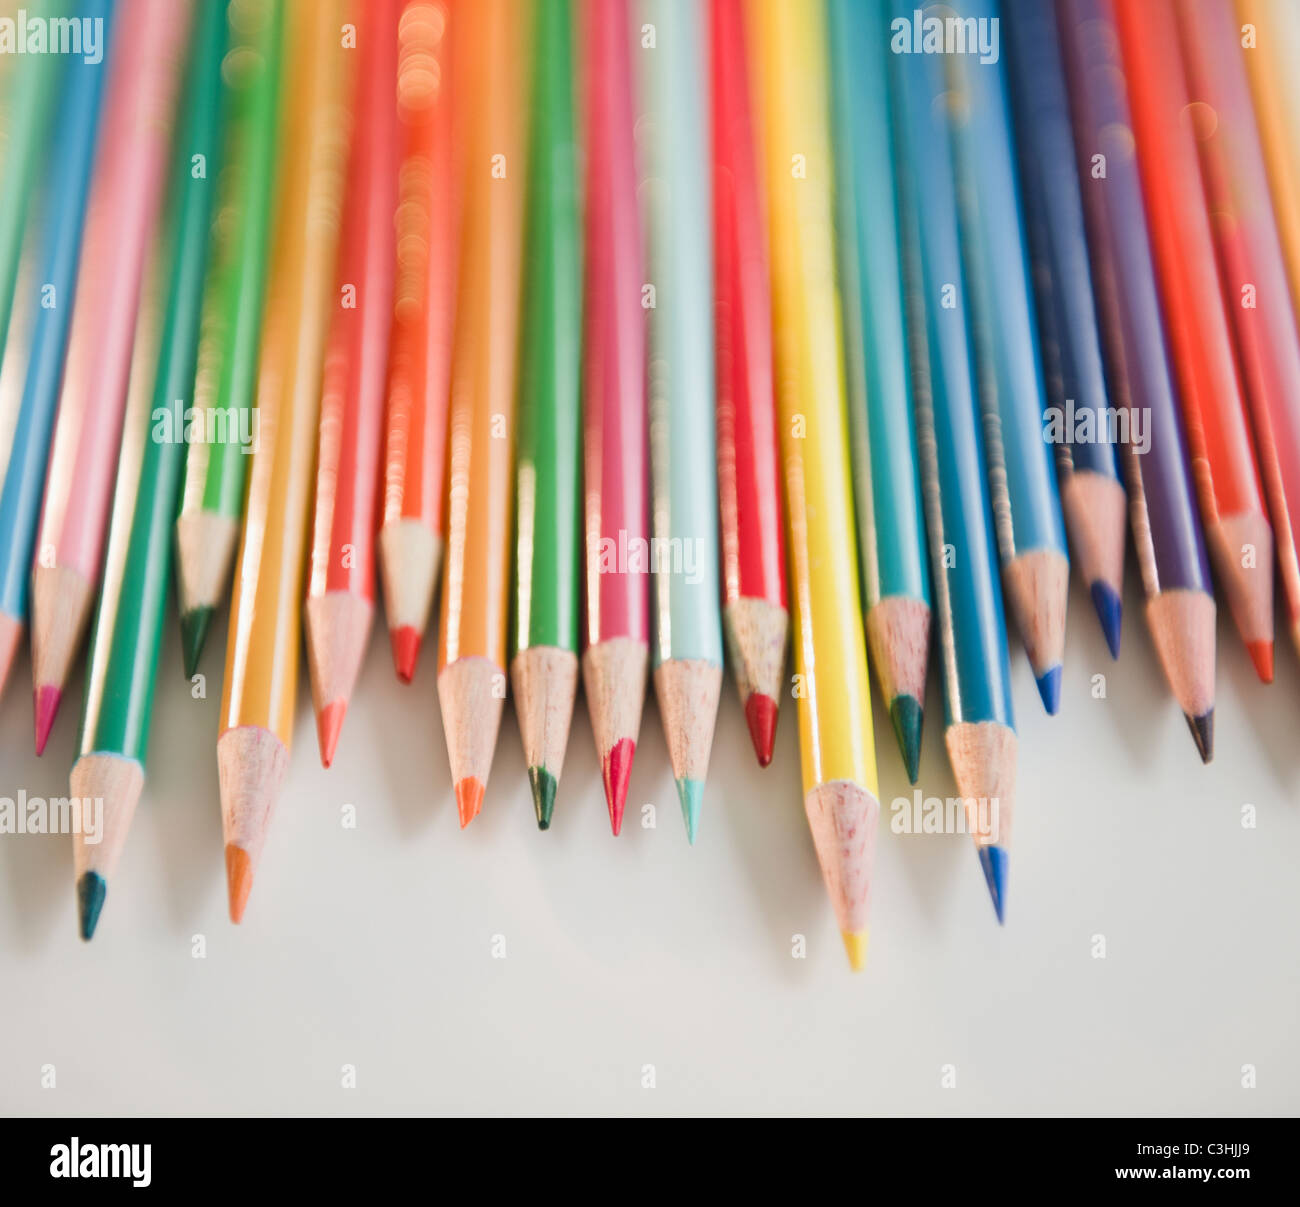 Studio shot of colored pencils in row Stock Photo